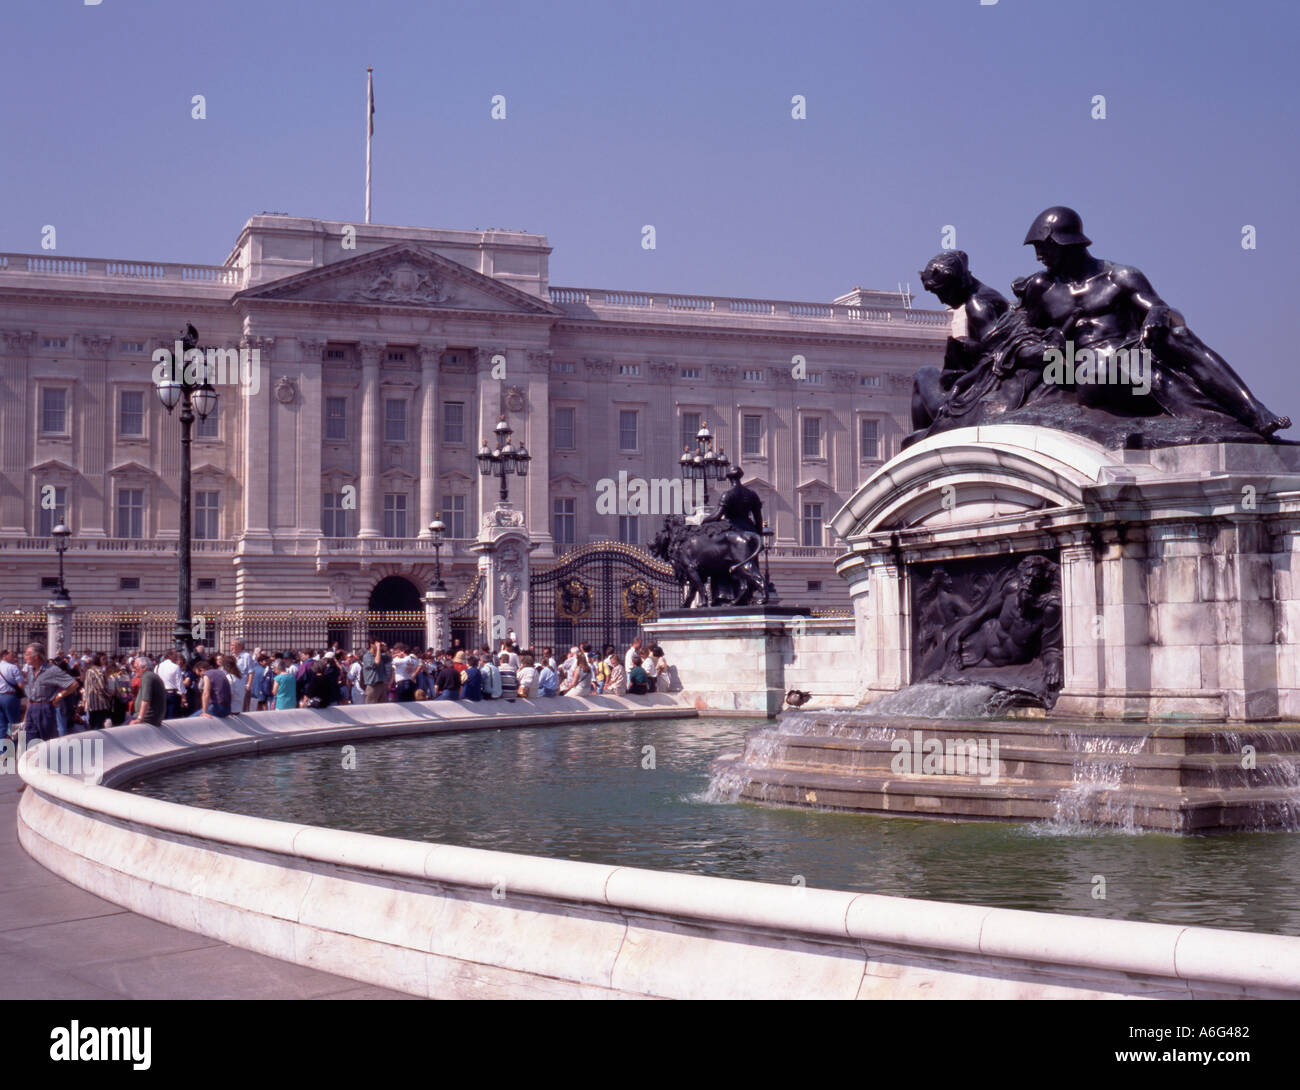 Buckingham Palace seen from base of Victoria Memorial, London, England, UK  Stock Photo - Alamy